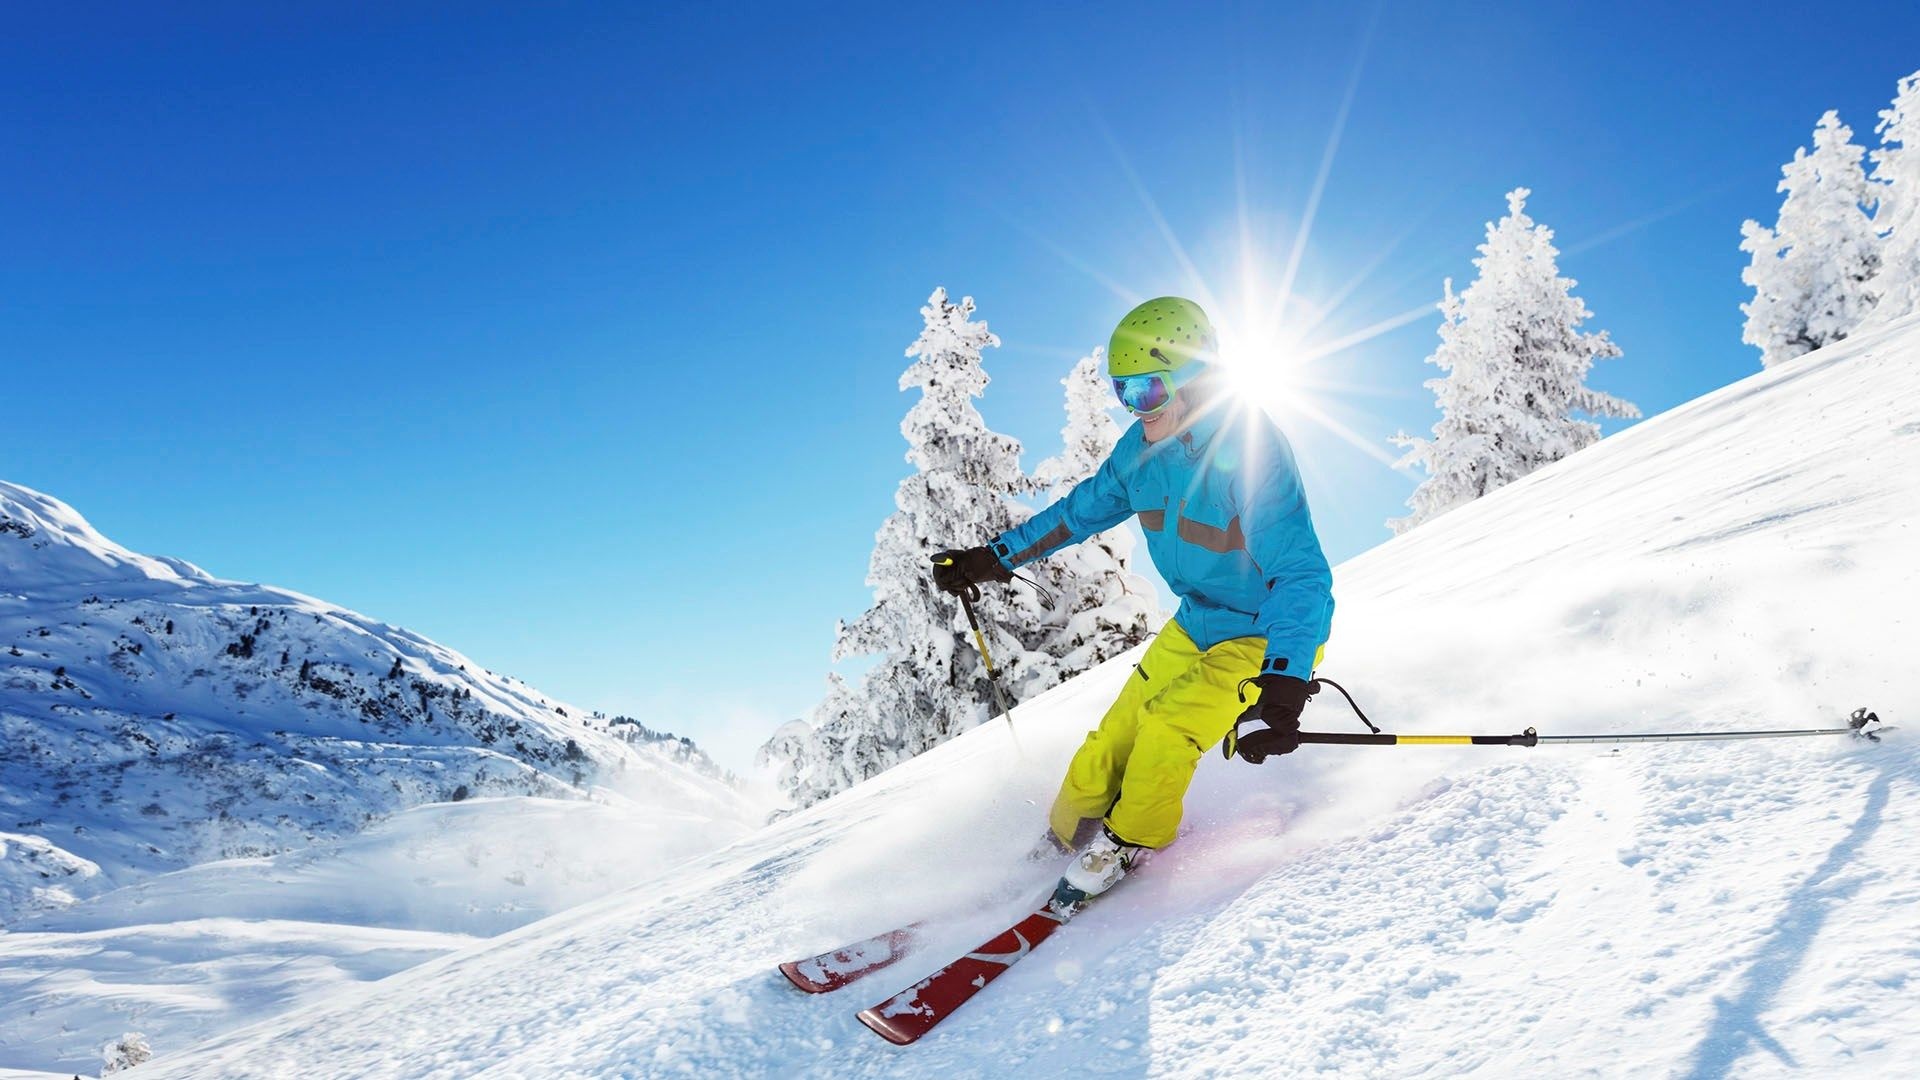 Skiing desktop wallpapers, Picturesque ski resorts, Thrilling downhill runs, Winter sports, 1920x1080 Full HD Desktop